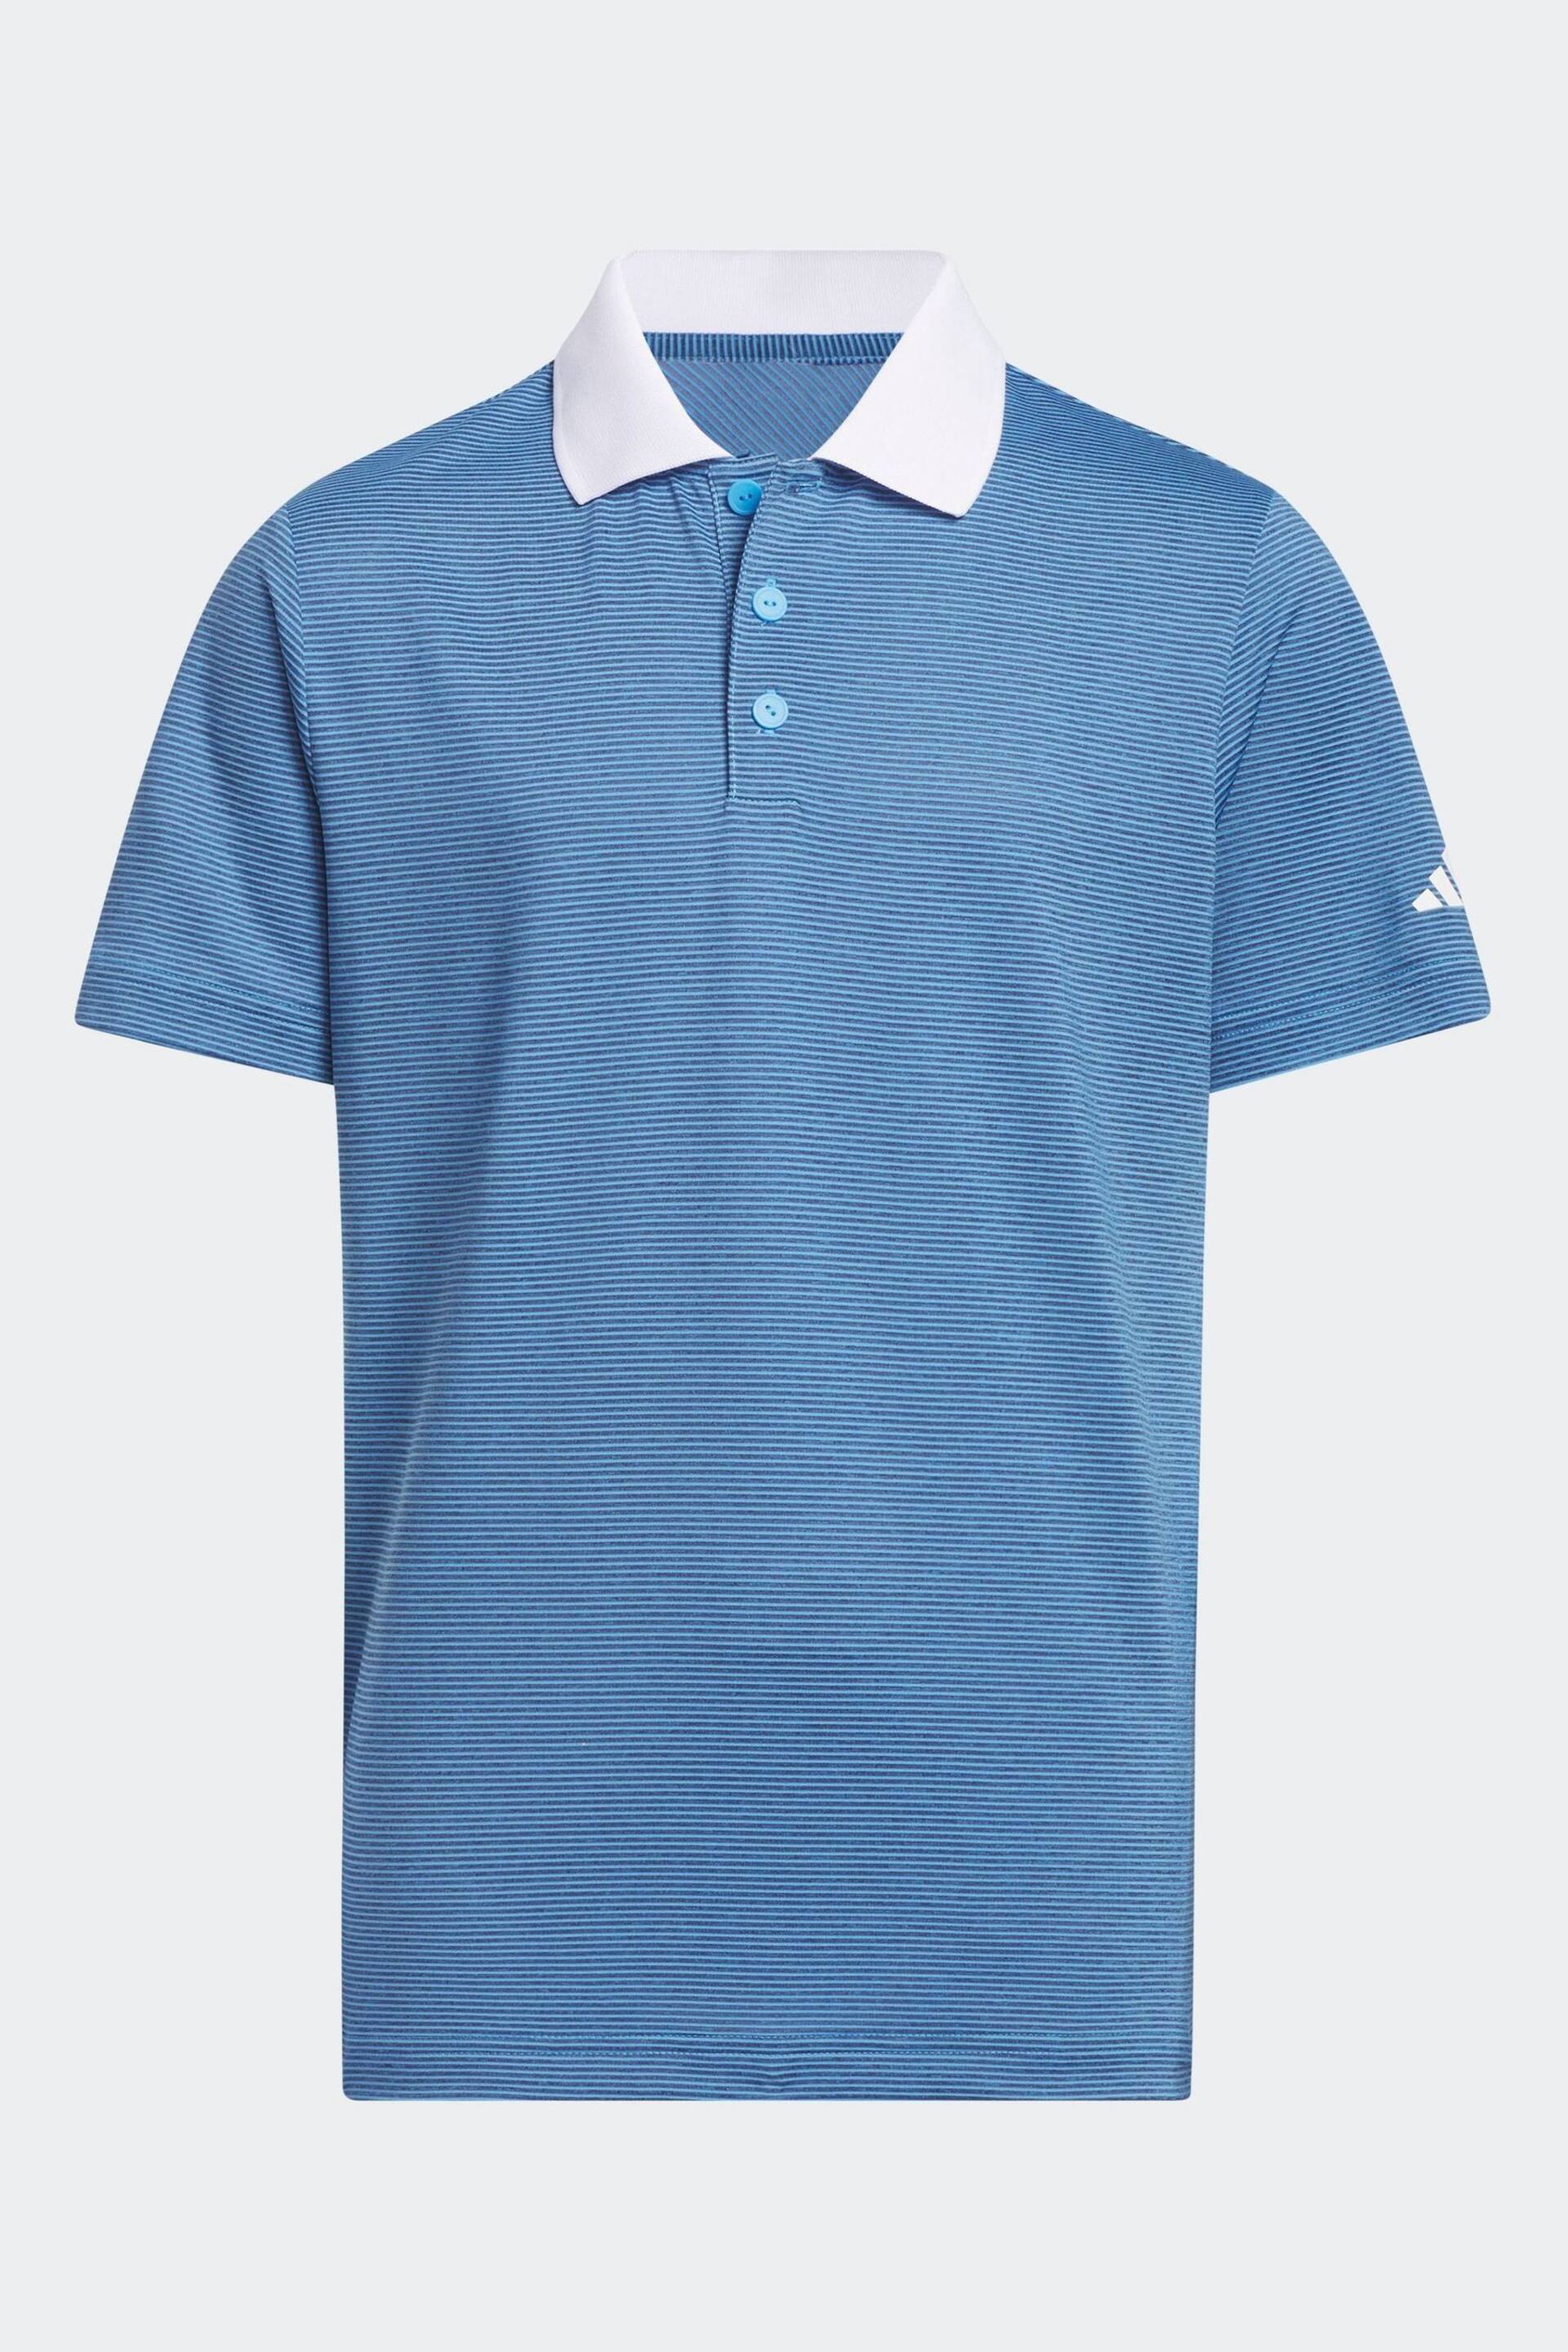 adidas Golf Striped Polo Shirt - Image 1 of 5